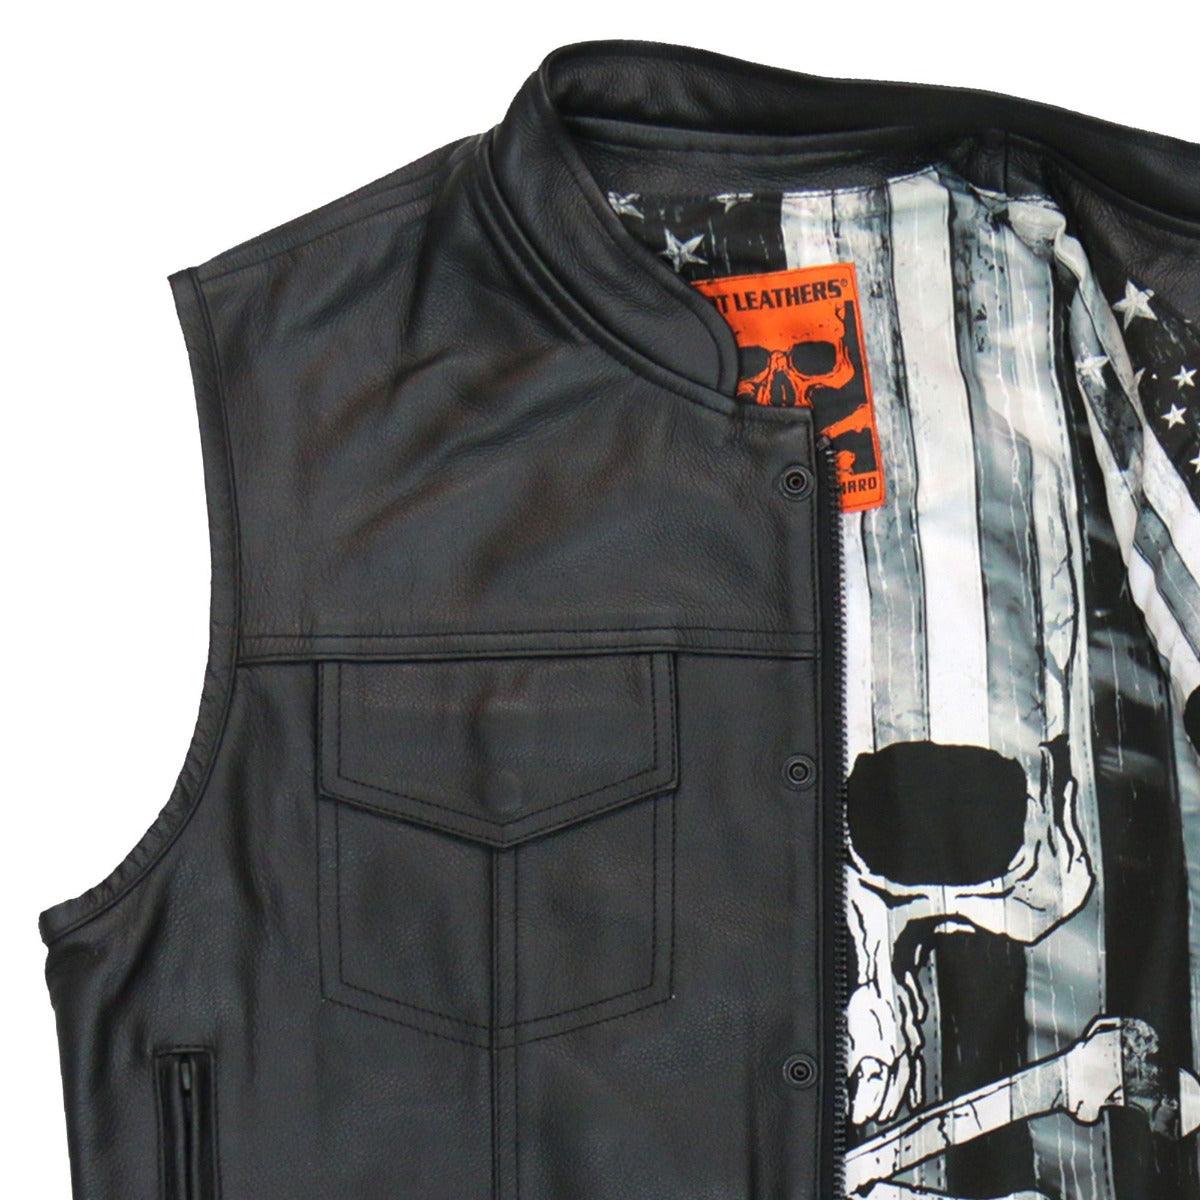 Hot Leathers Club Vest Skull Flag Liner Carry Conceal - American Legend Rider